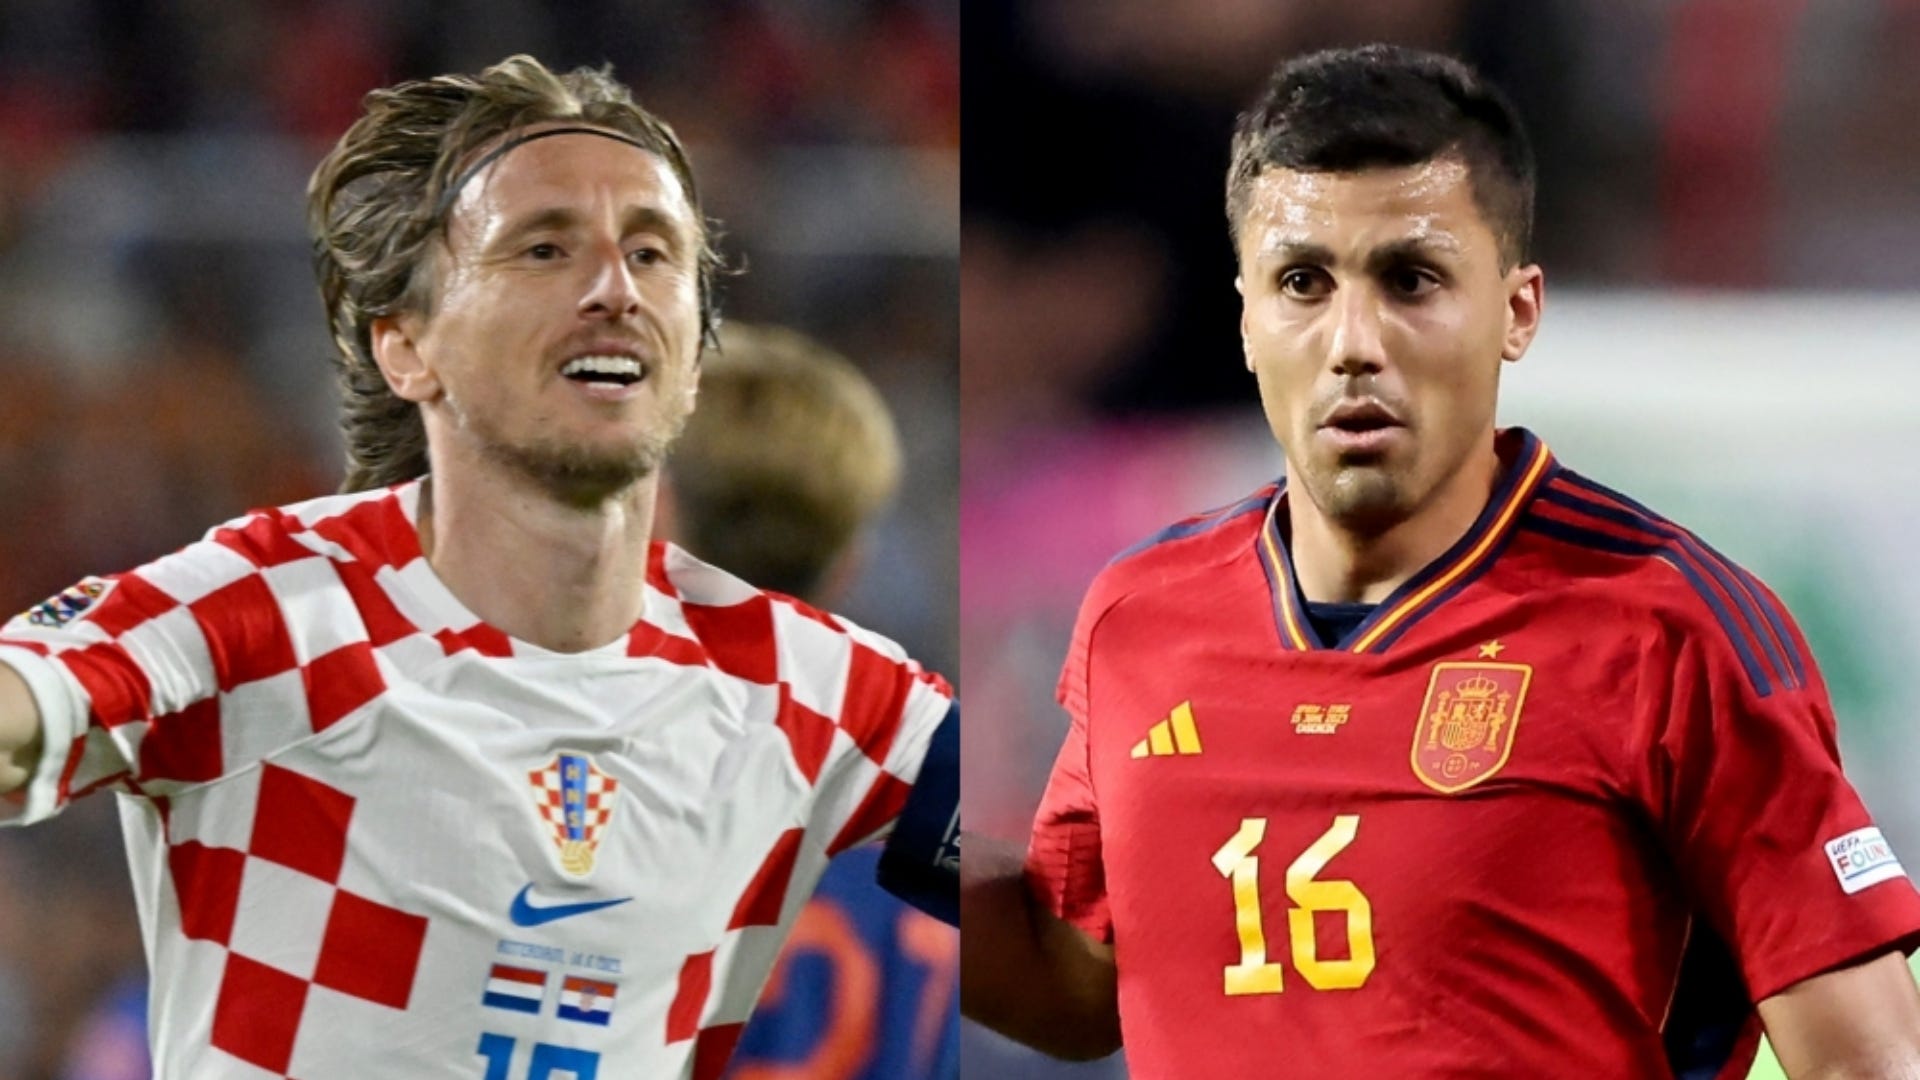 Croácia x Espanha na Eurocopa 2021: prognóstico